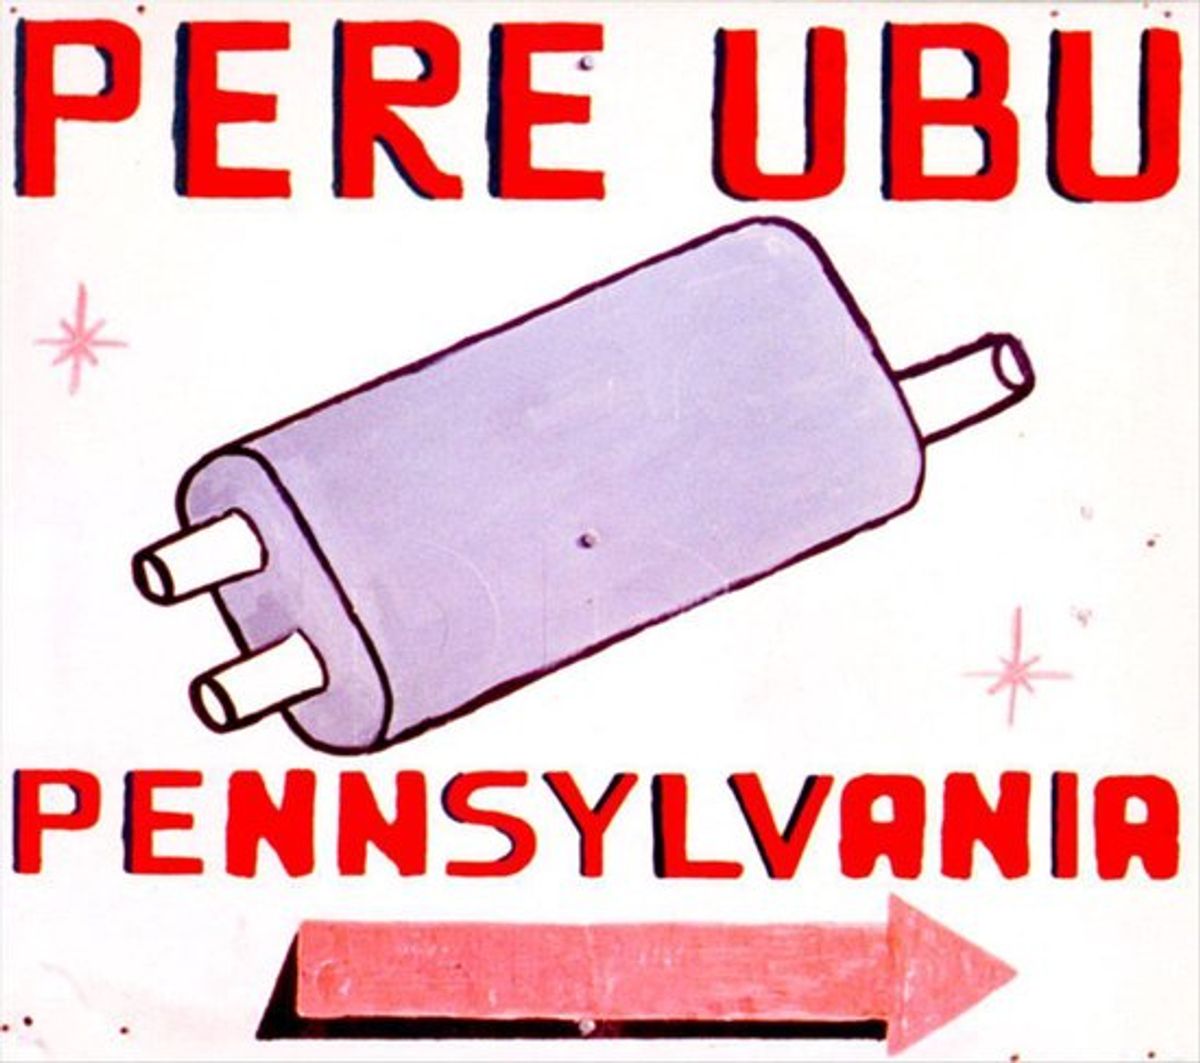 Pere Ubu - 'Pennsylvania'